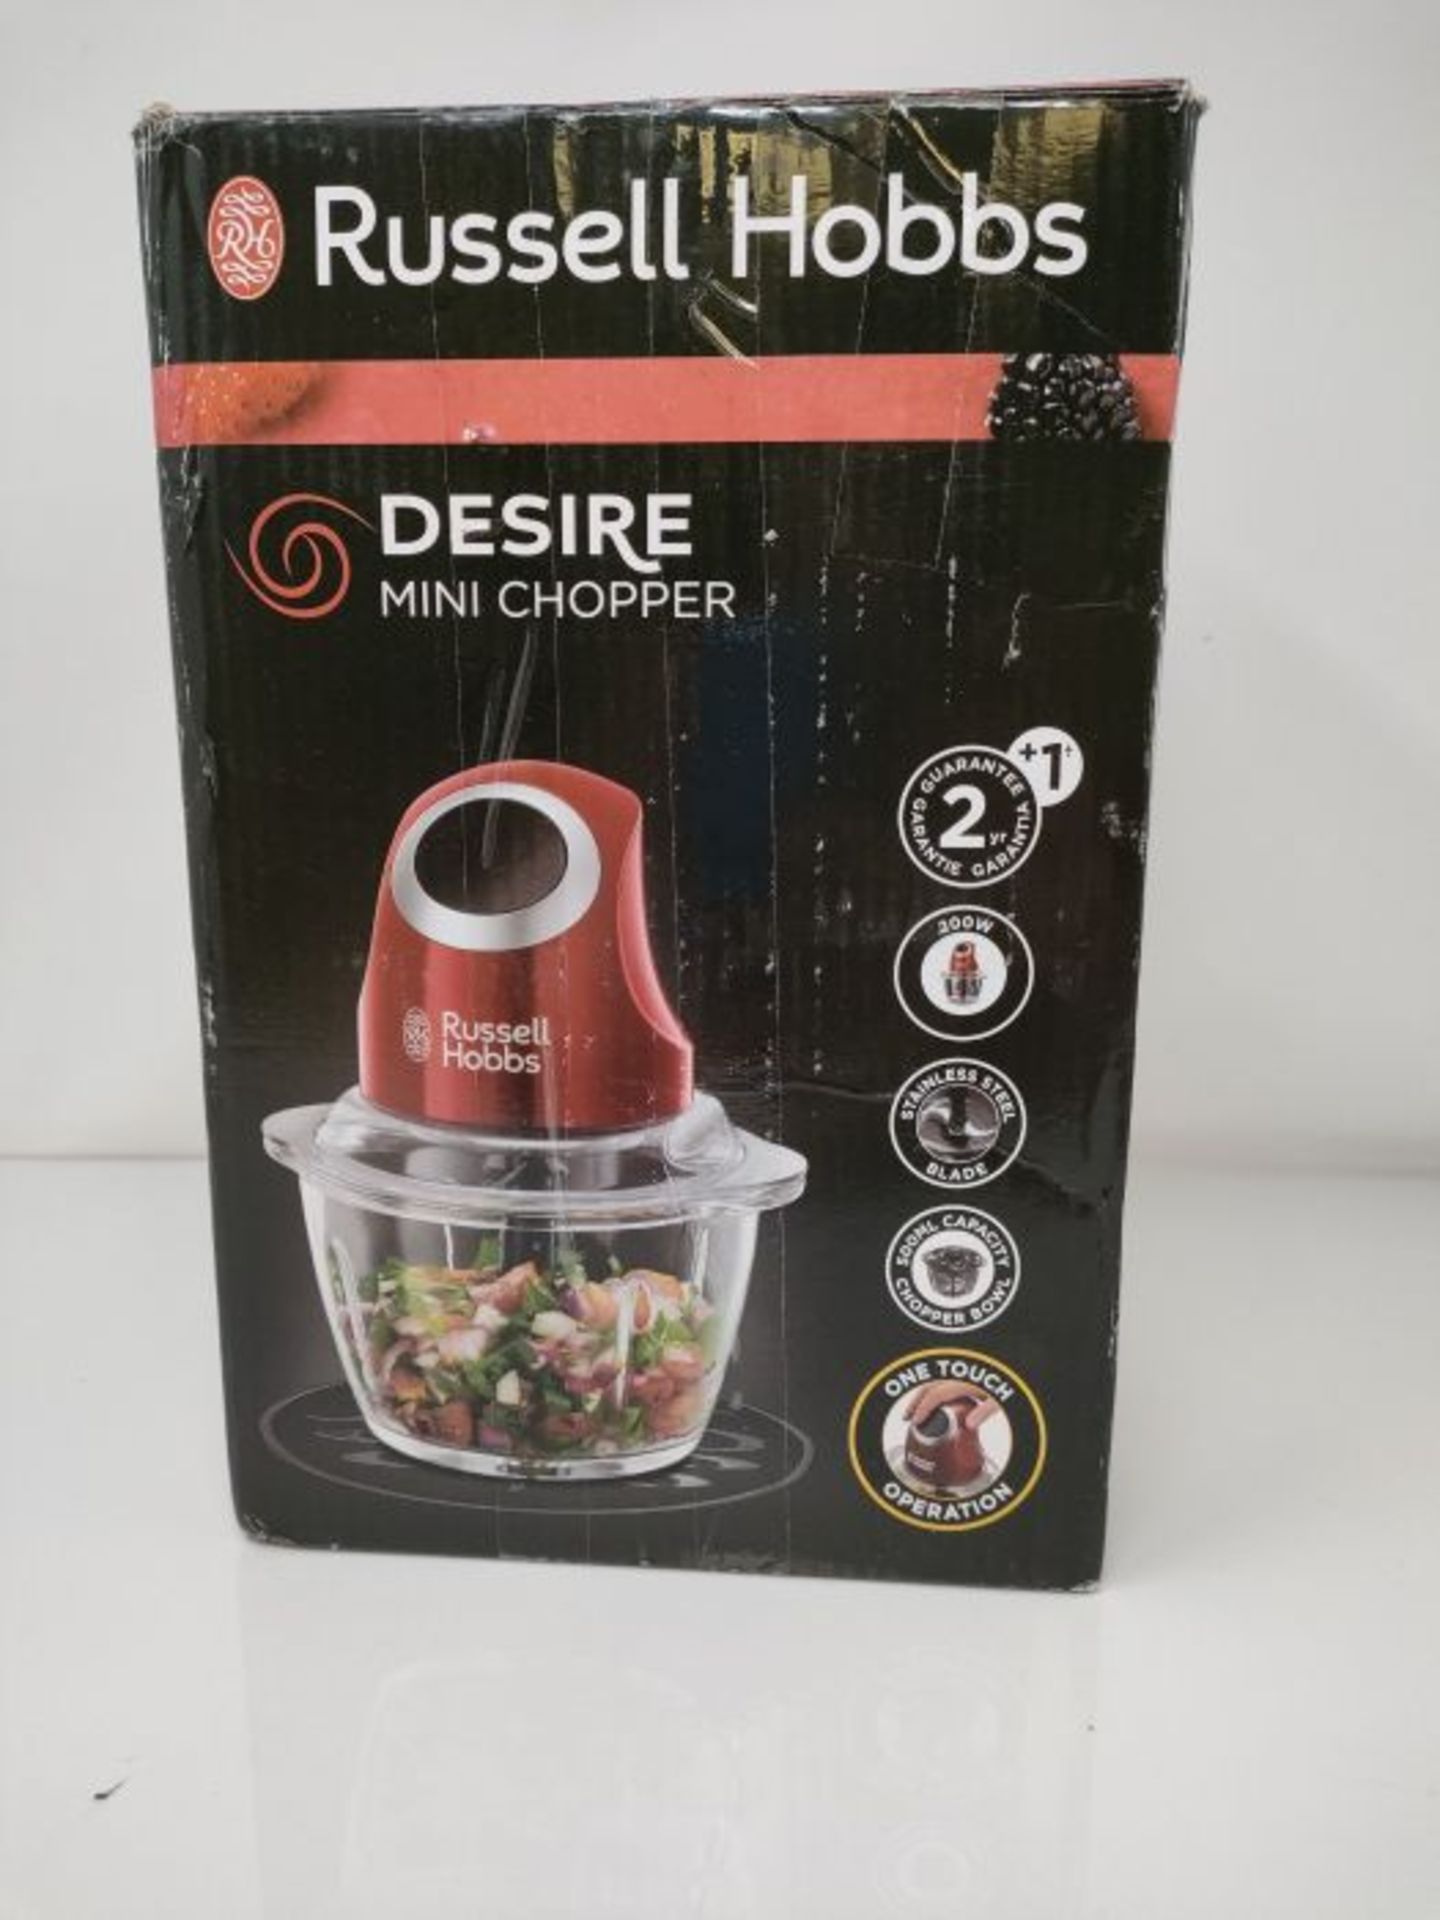 Russell Hobbs 24660-56 Mini choper Desire-24660-56, red - Image 2 of 3